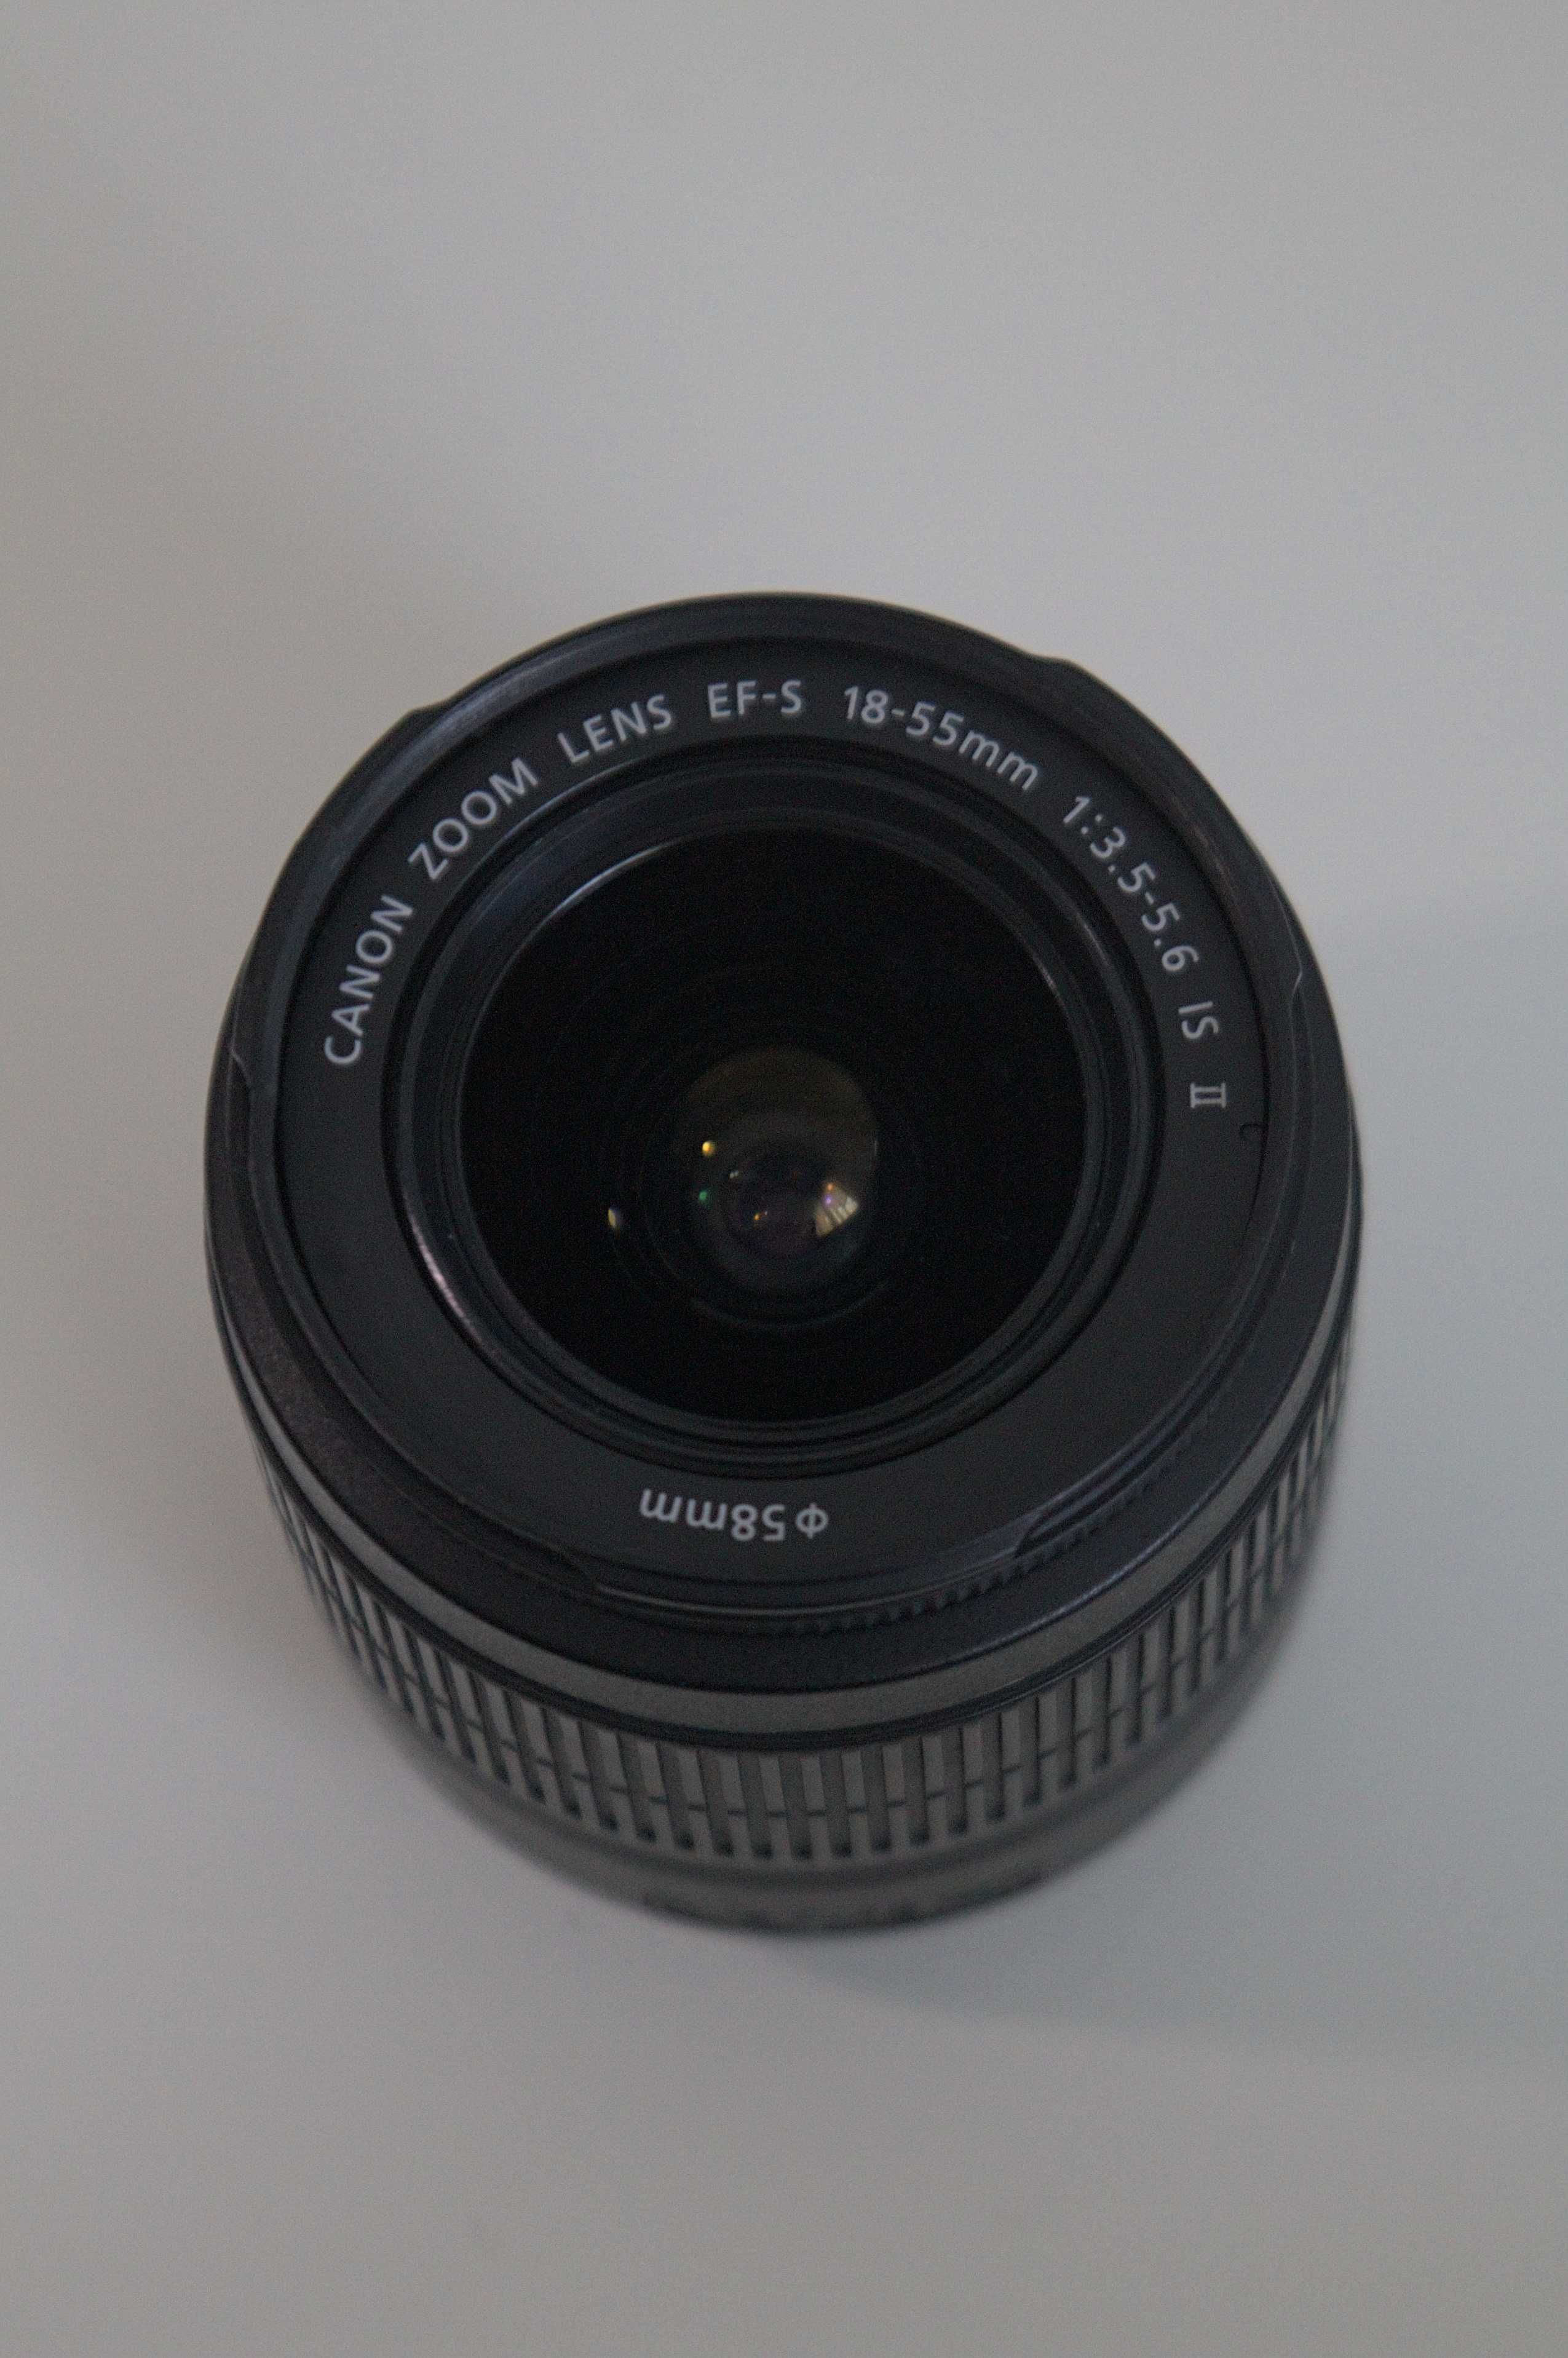 Canon EF-S 18-55mm 1:3.5-5.6 IS II